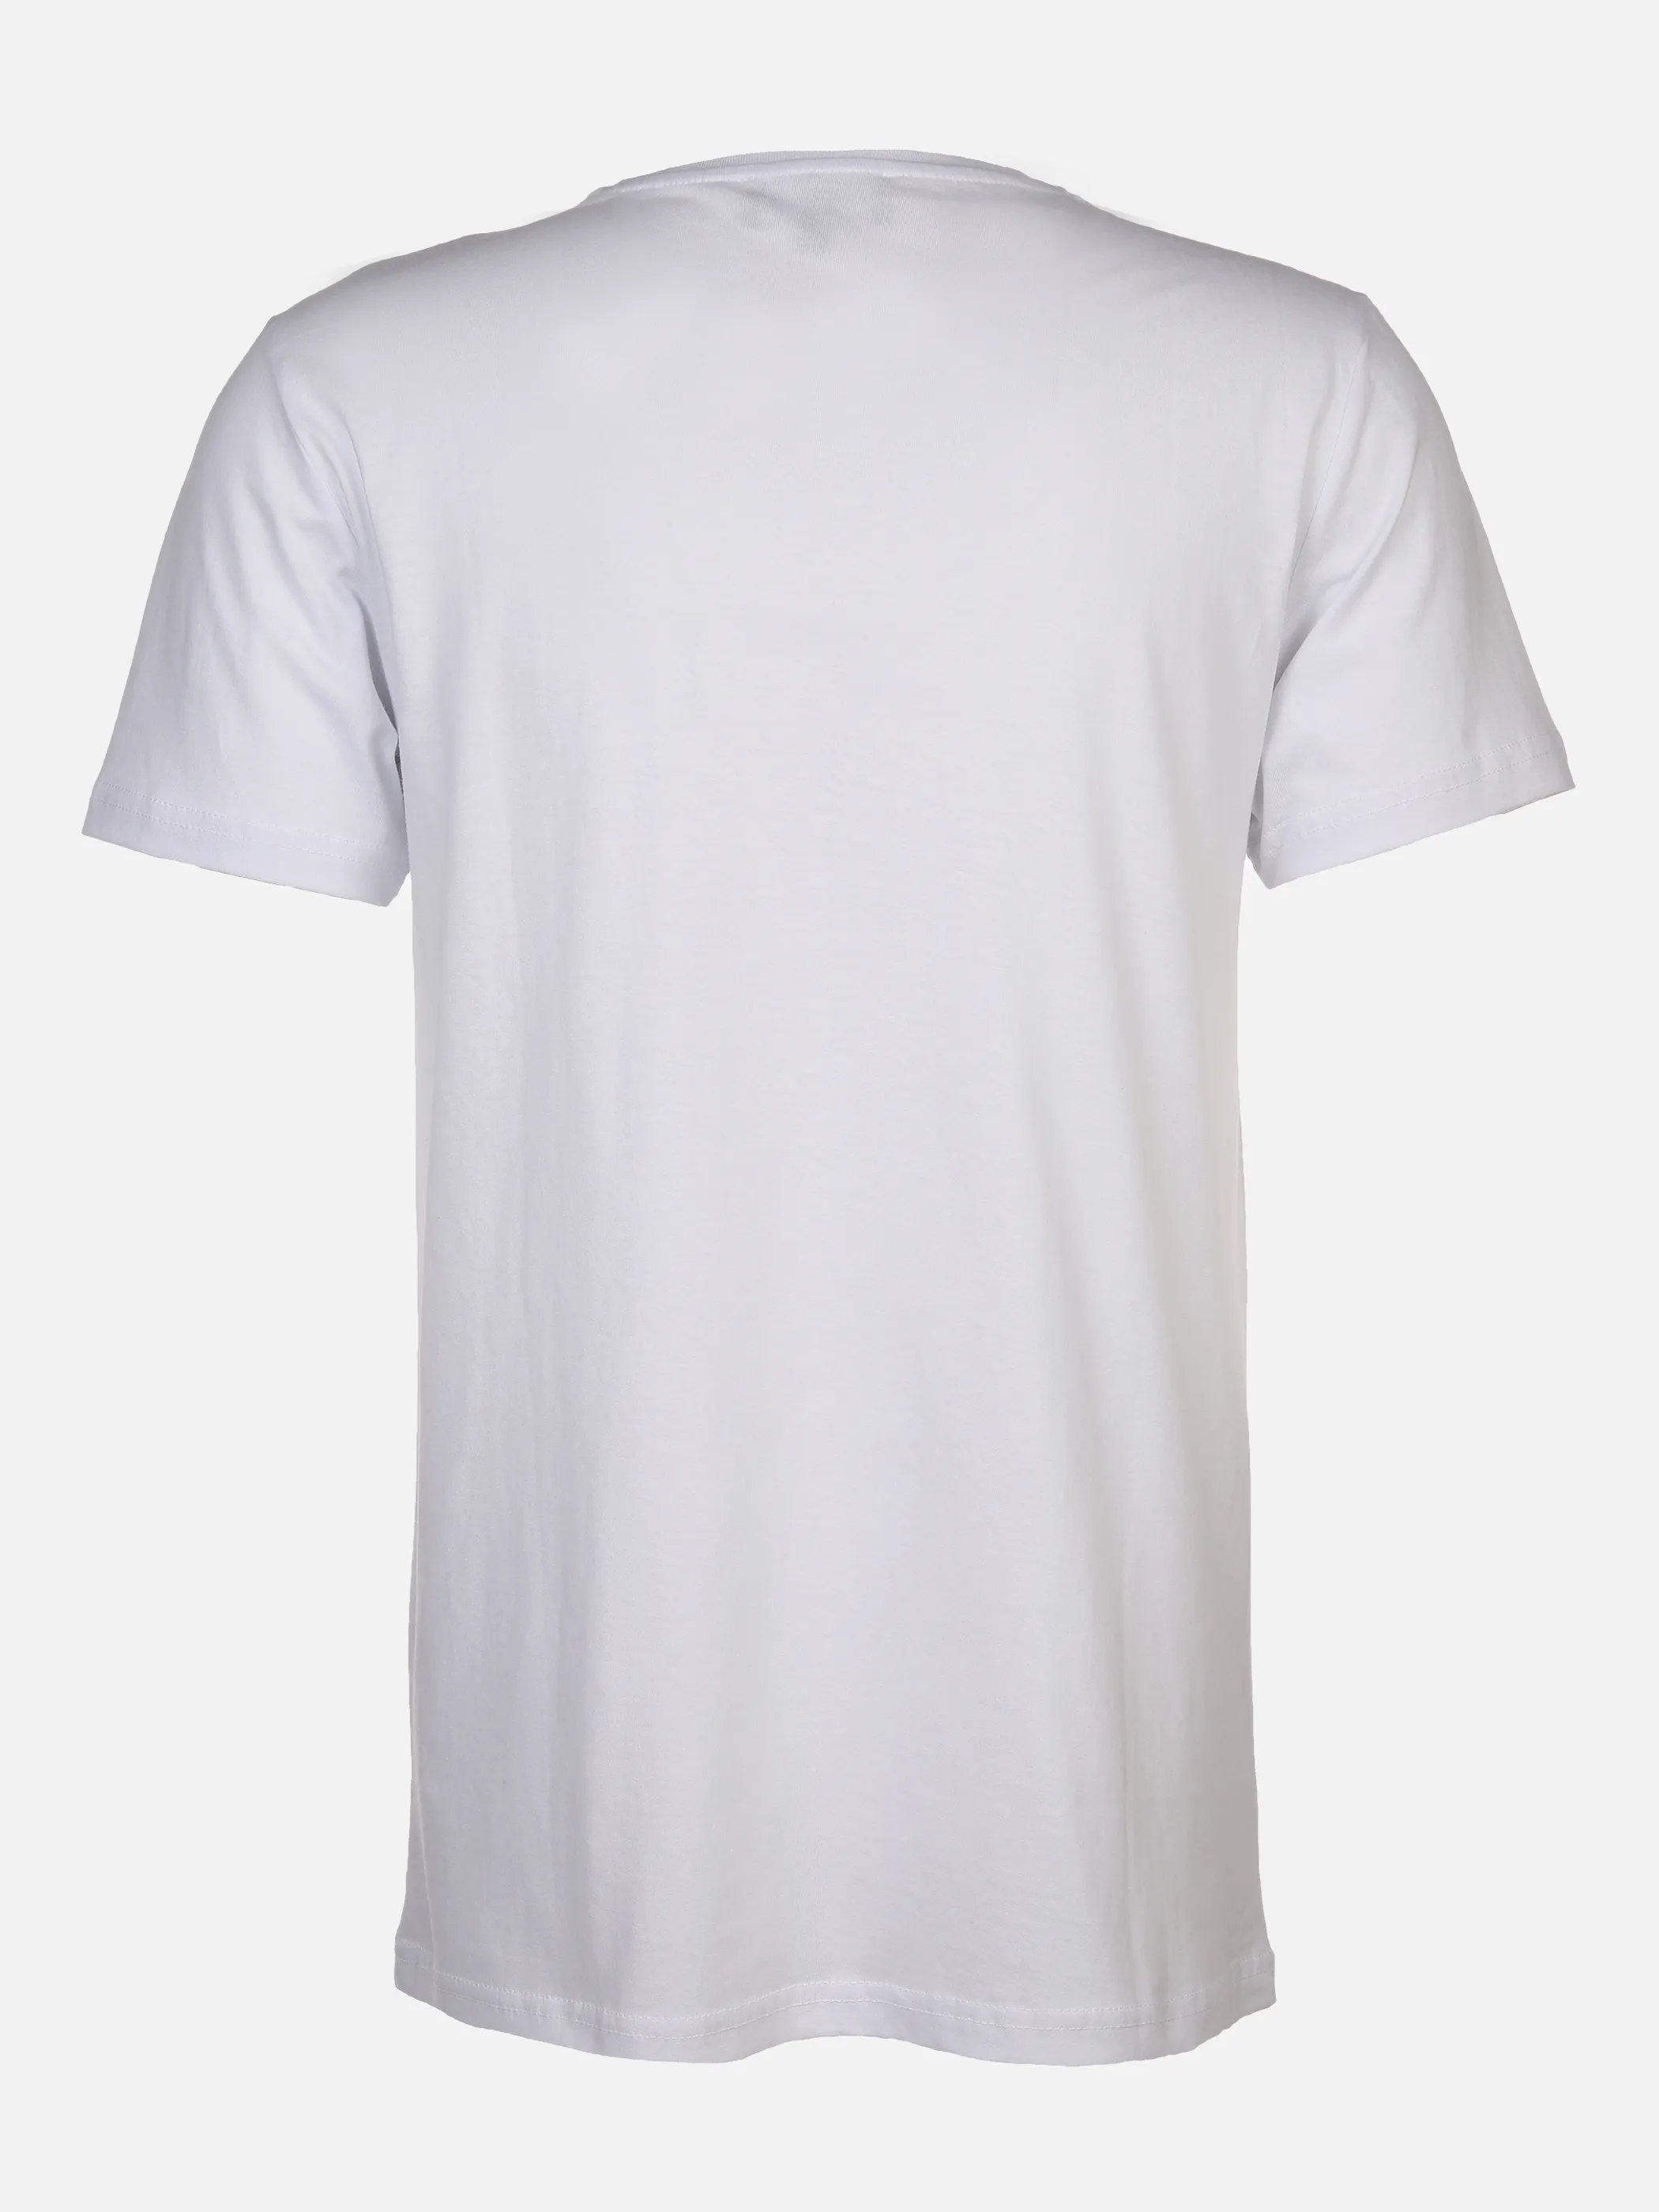 Harvey Miller He. T-Shirt 1/2 Arm Logo Weiß 882848 WHITE 2